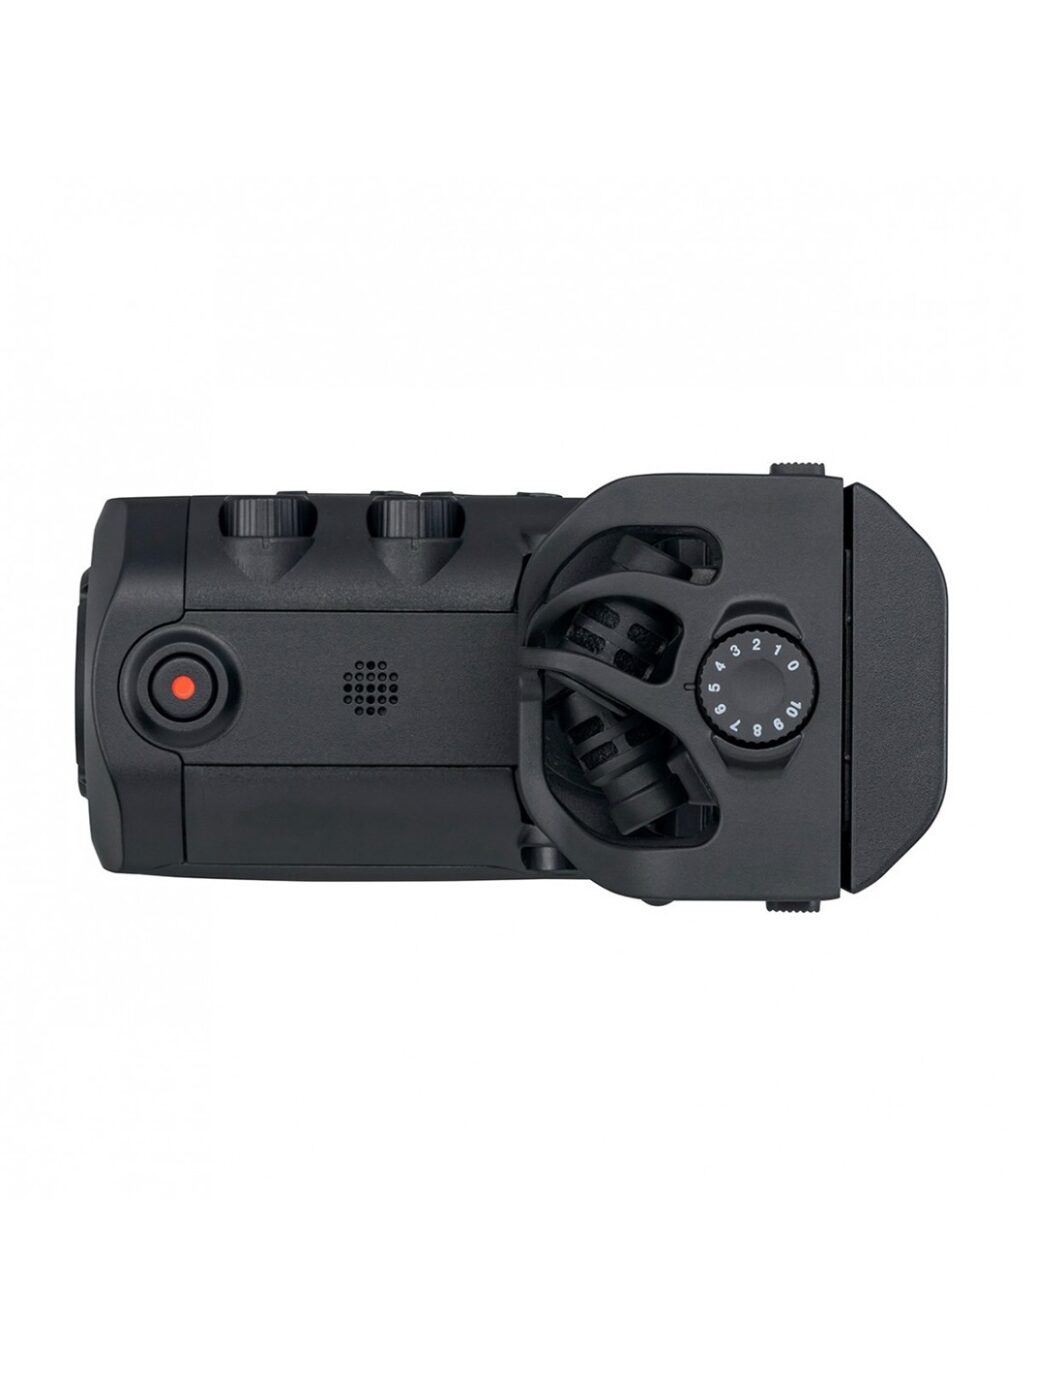 ZOOM Q8n-4K Handy Video Recorder